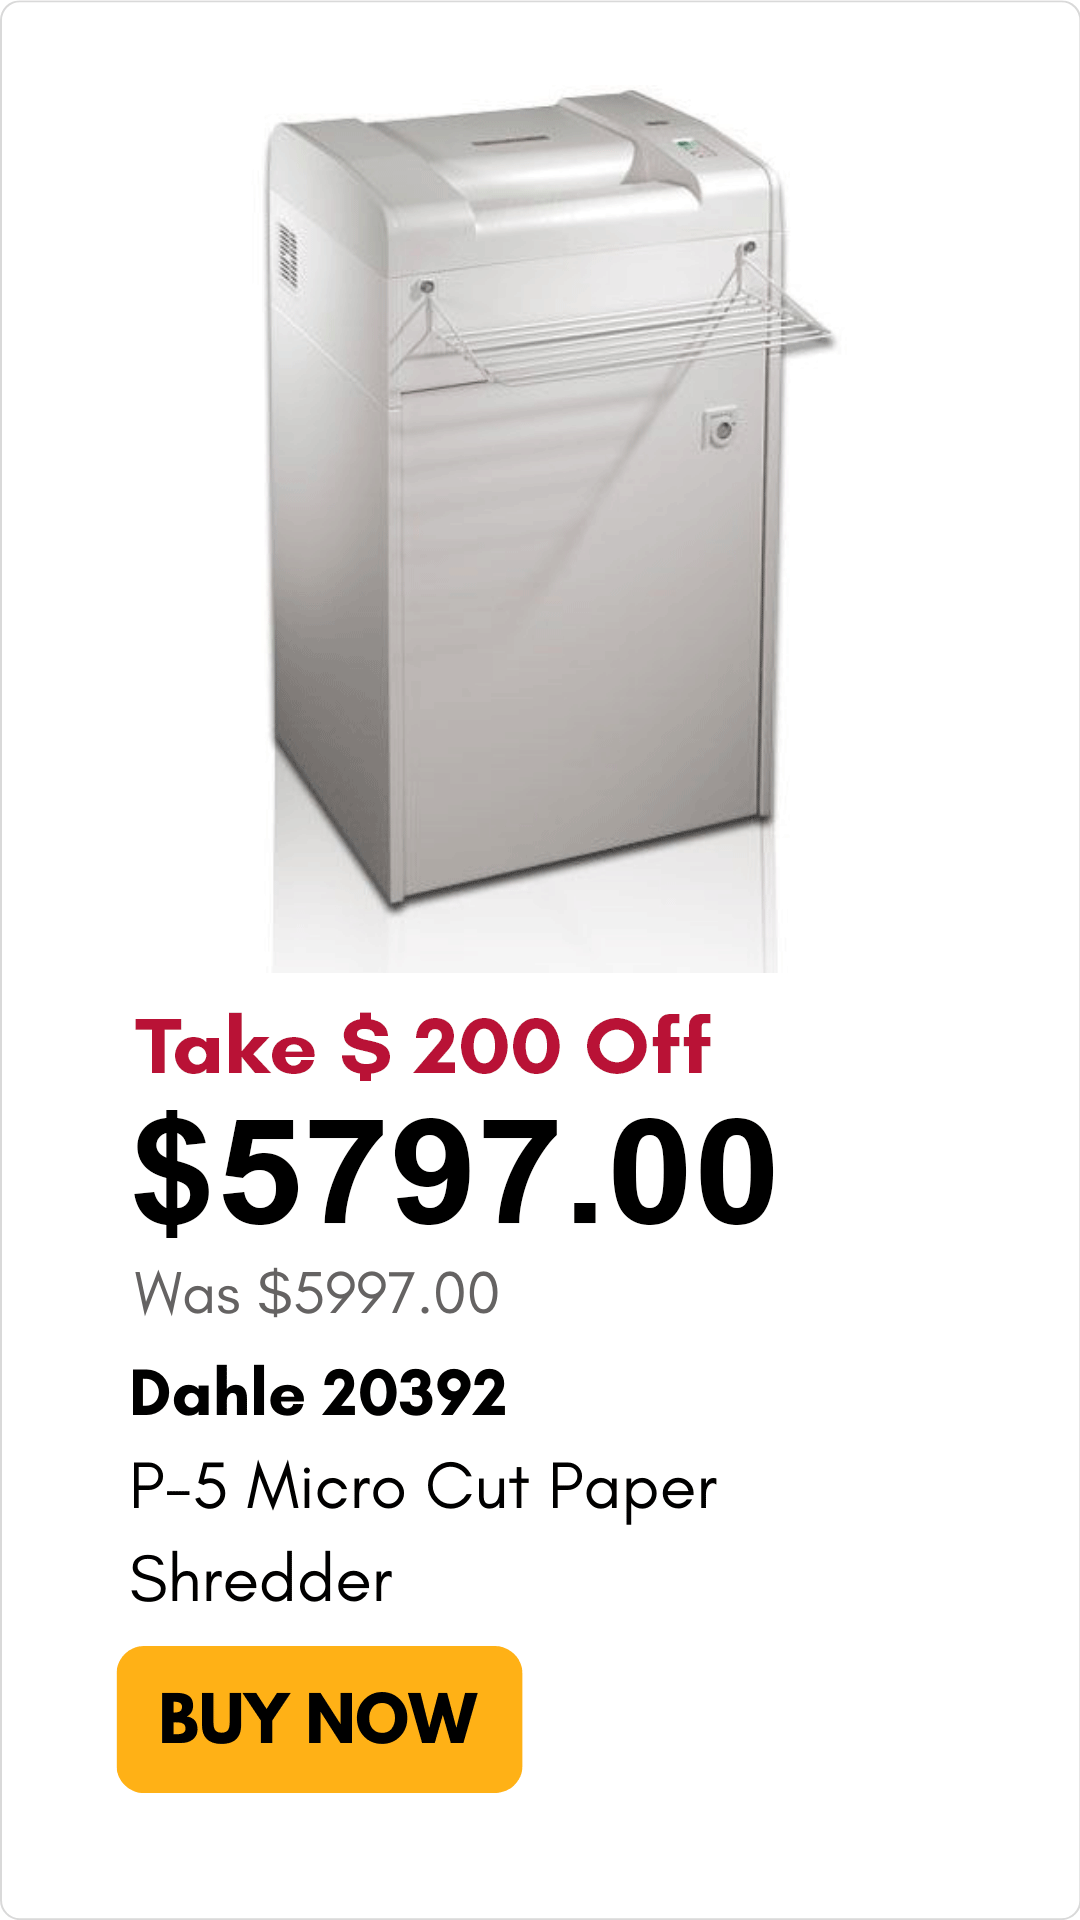 Dahle 20392 High Capacity Level P-5 Paper Shredder on sale for $200 off